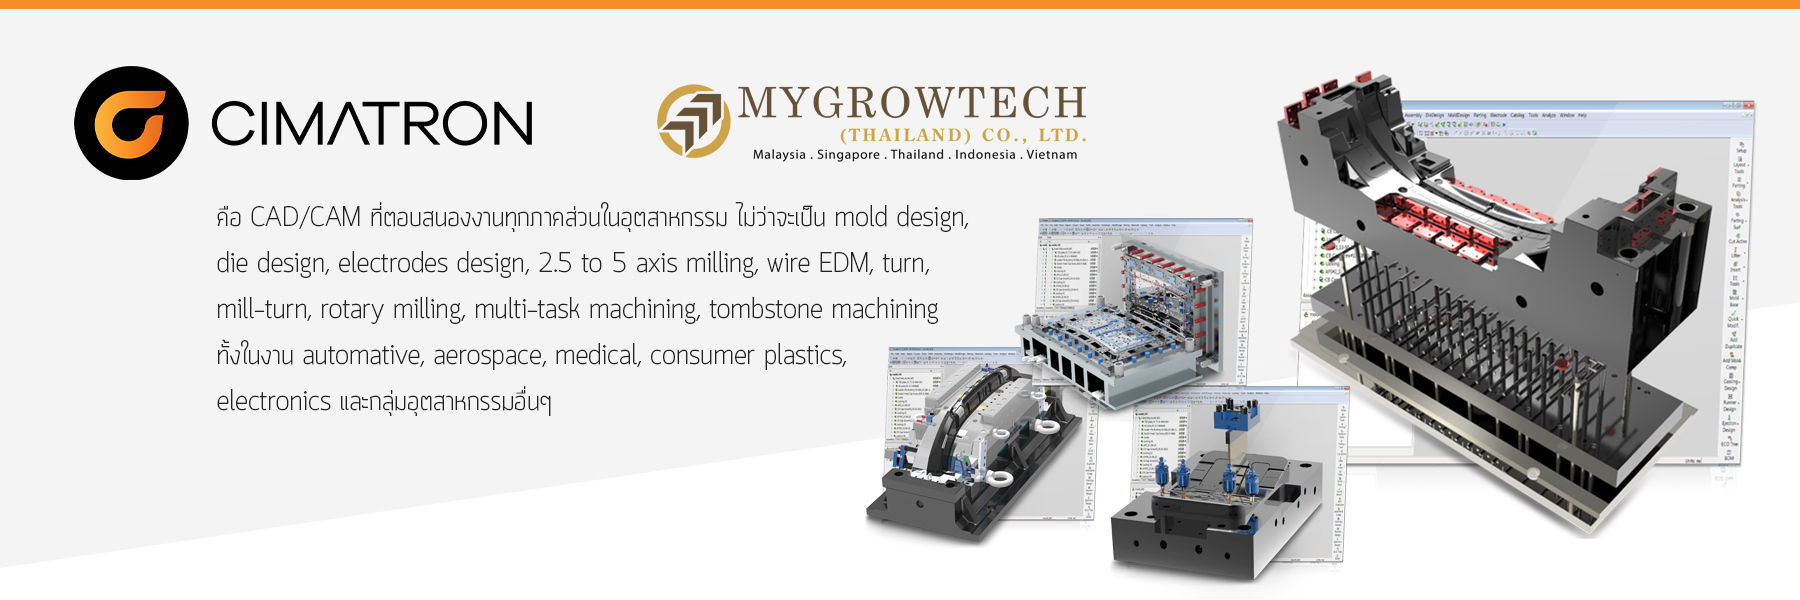 Cimatron 15 CAD CAM CNC - Mygrowtechthailand